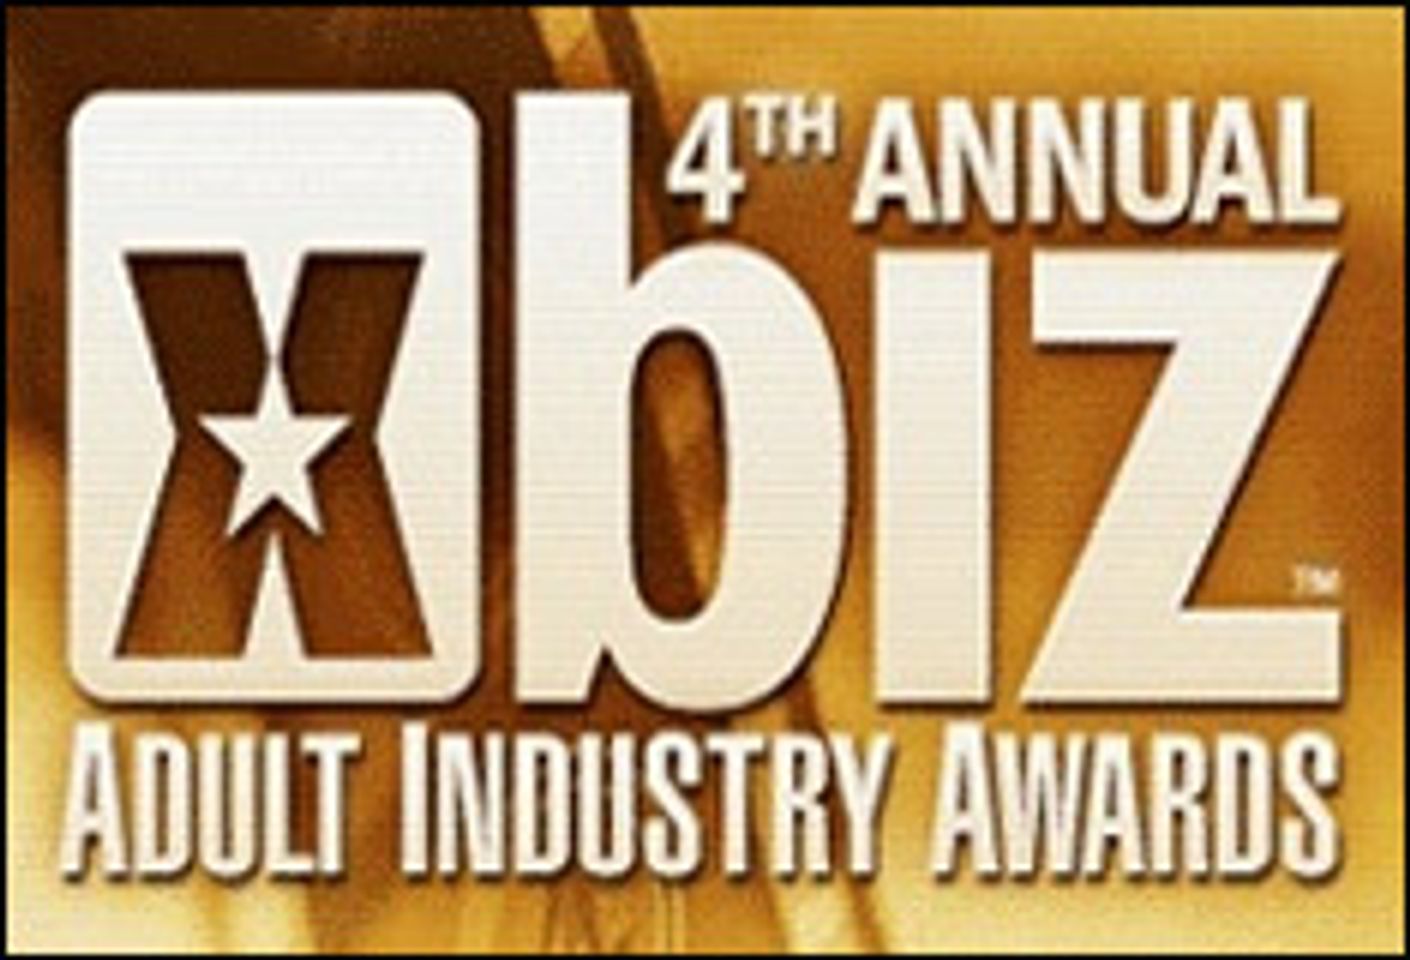 XBiz Awards Produce a Few Surprises